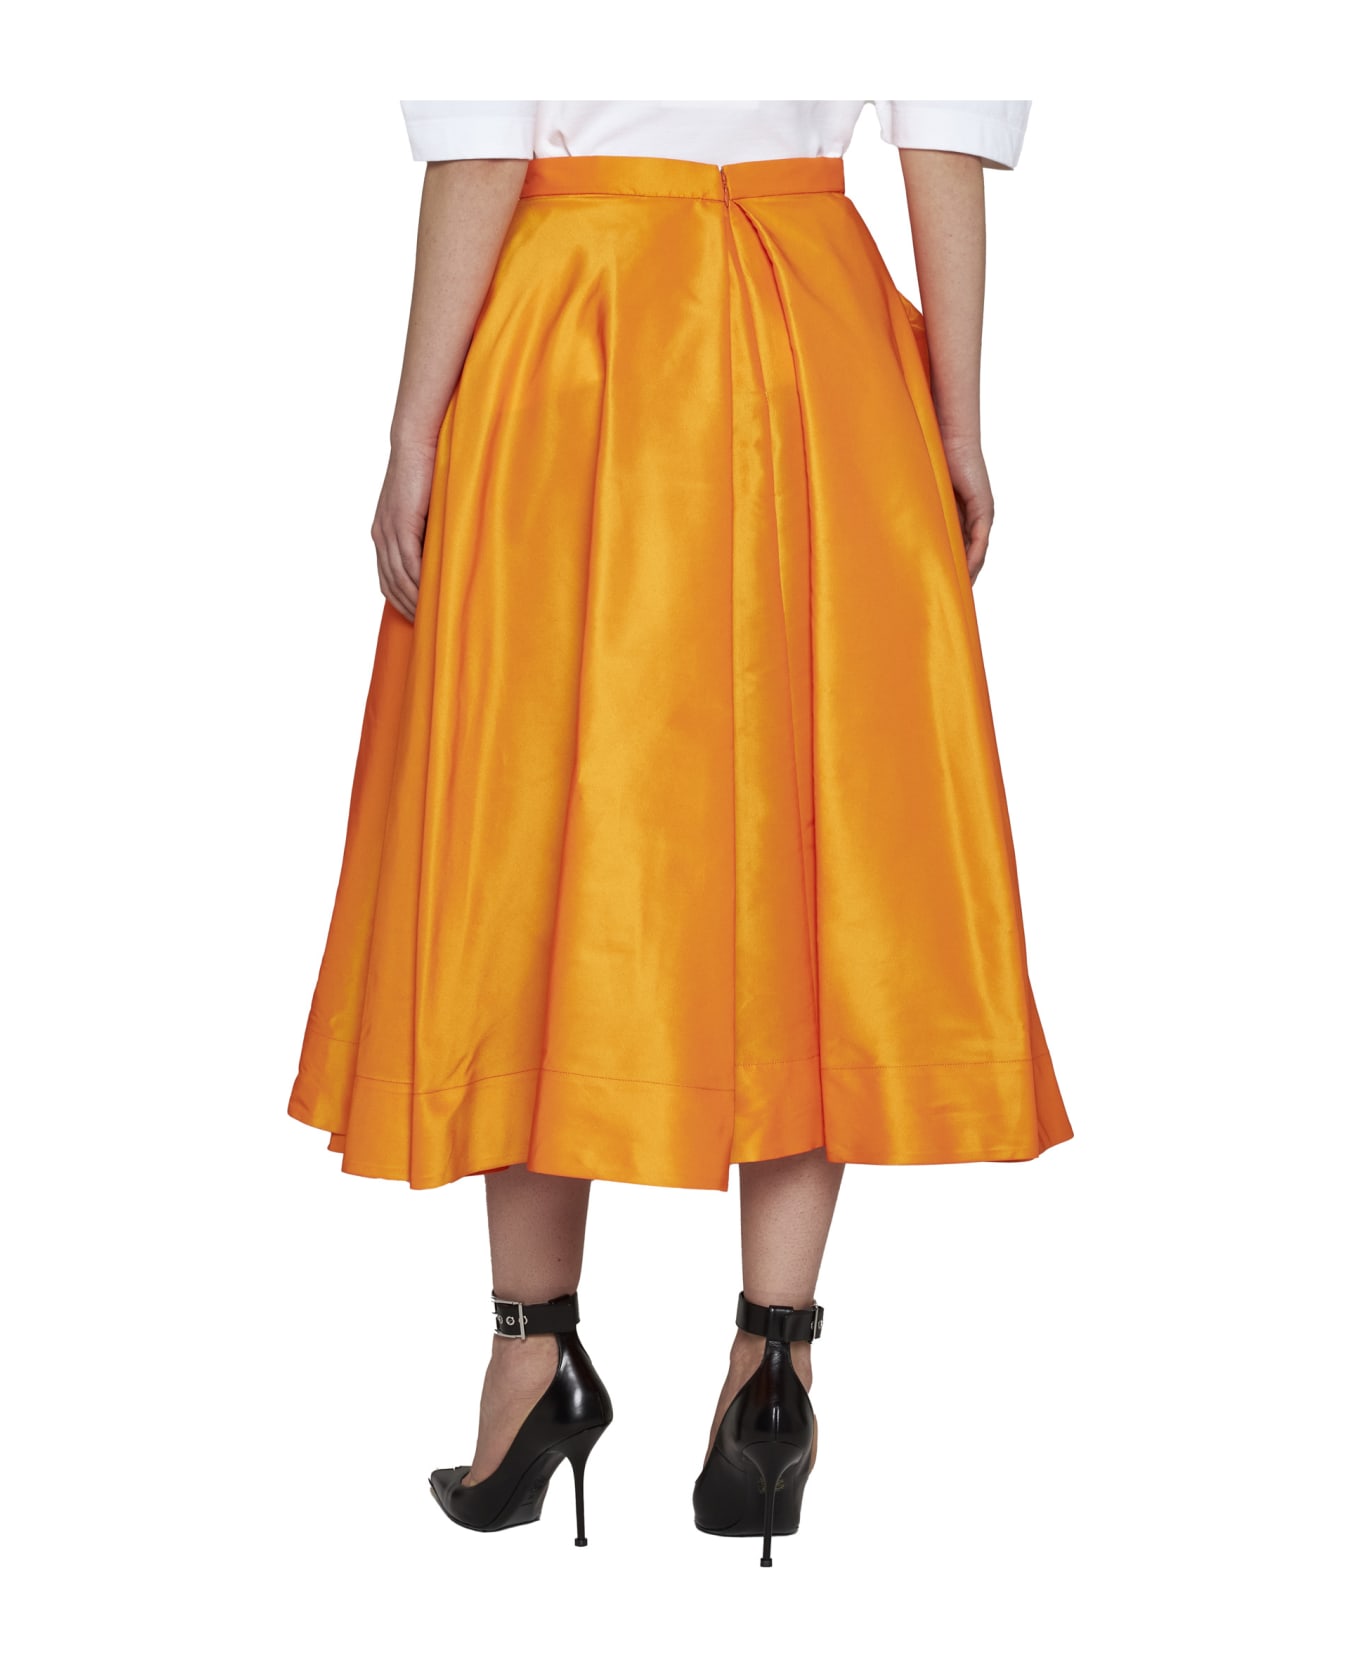 Alexander McQueen Skirt - Sunset orange